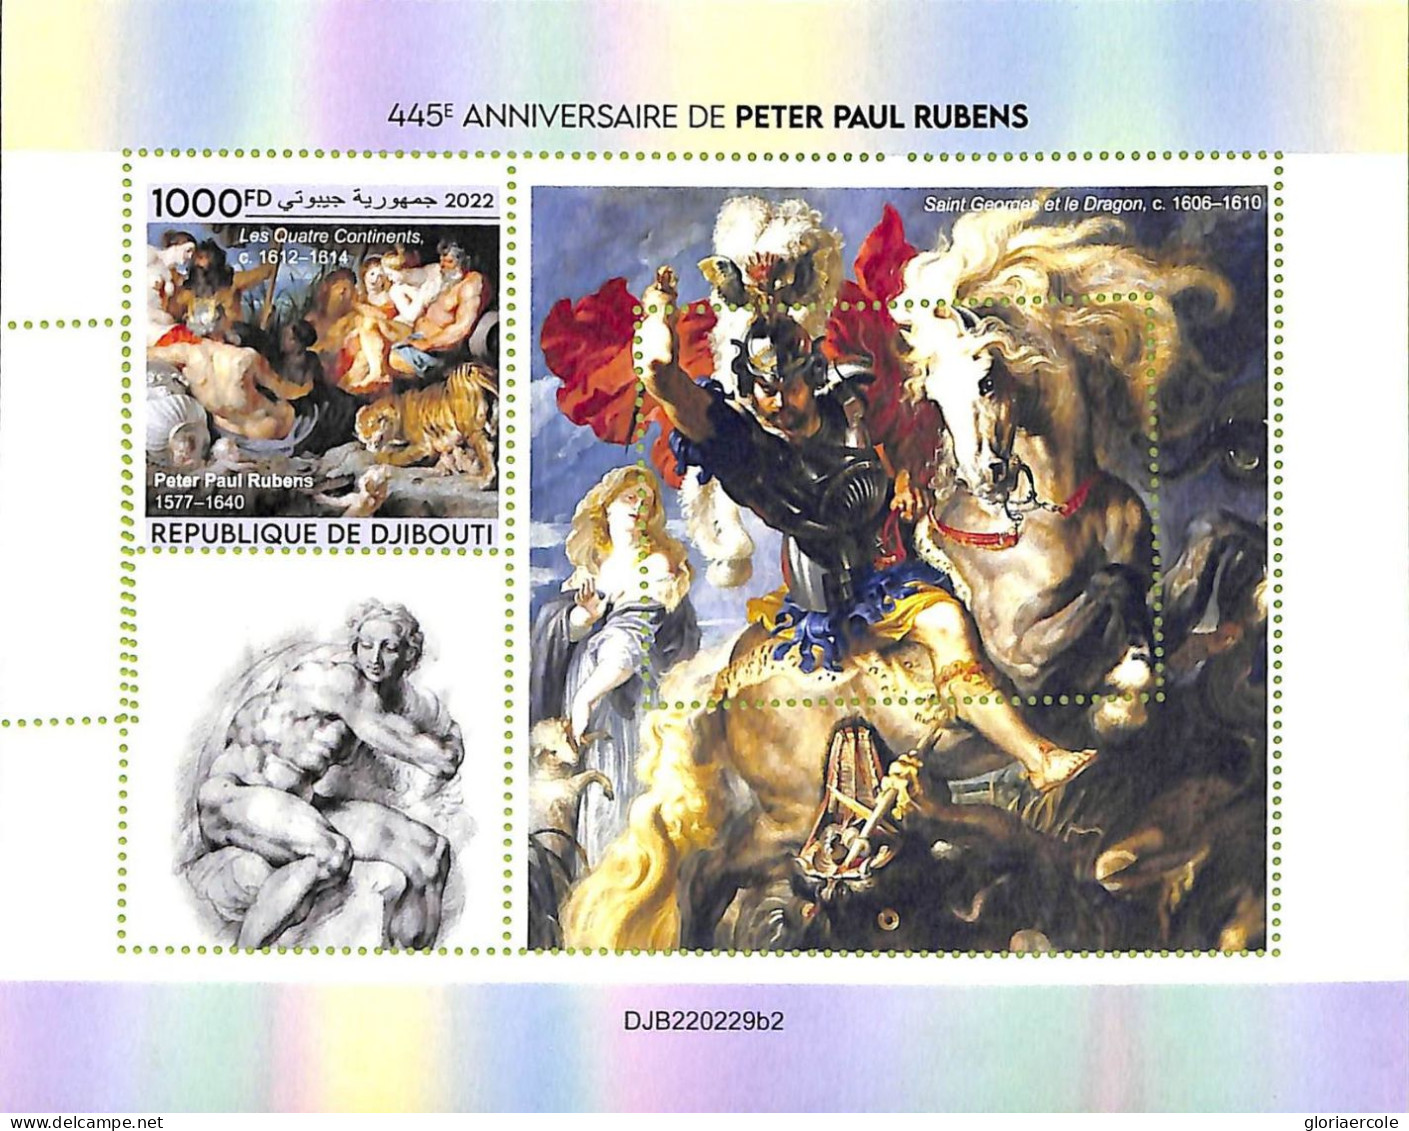 A7515 - DJIBOUTI - ERROR MISPERF Stamp Sheet - 2022 - ART Peter Paul Rubens - Rubens